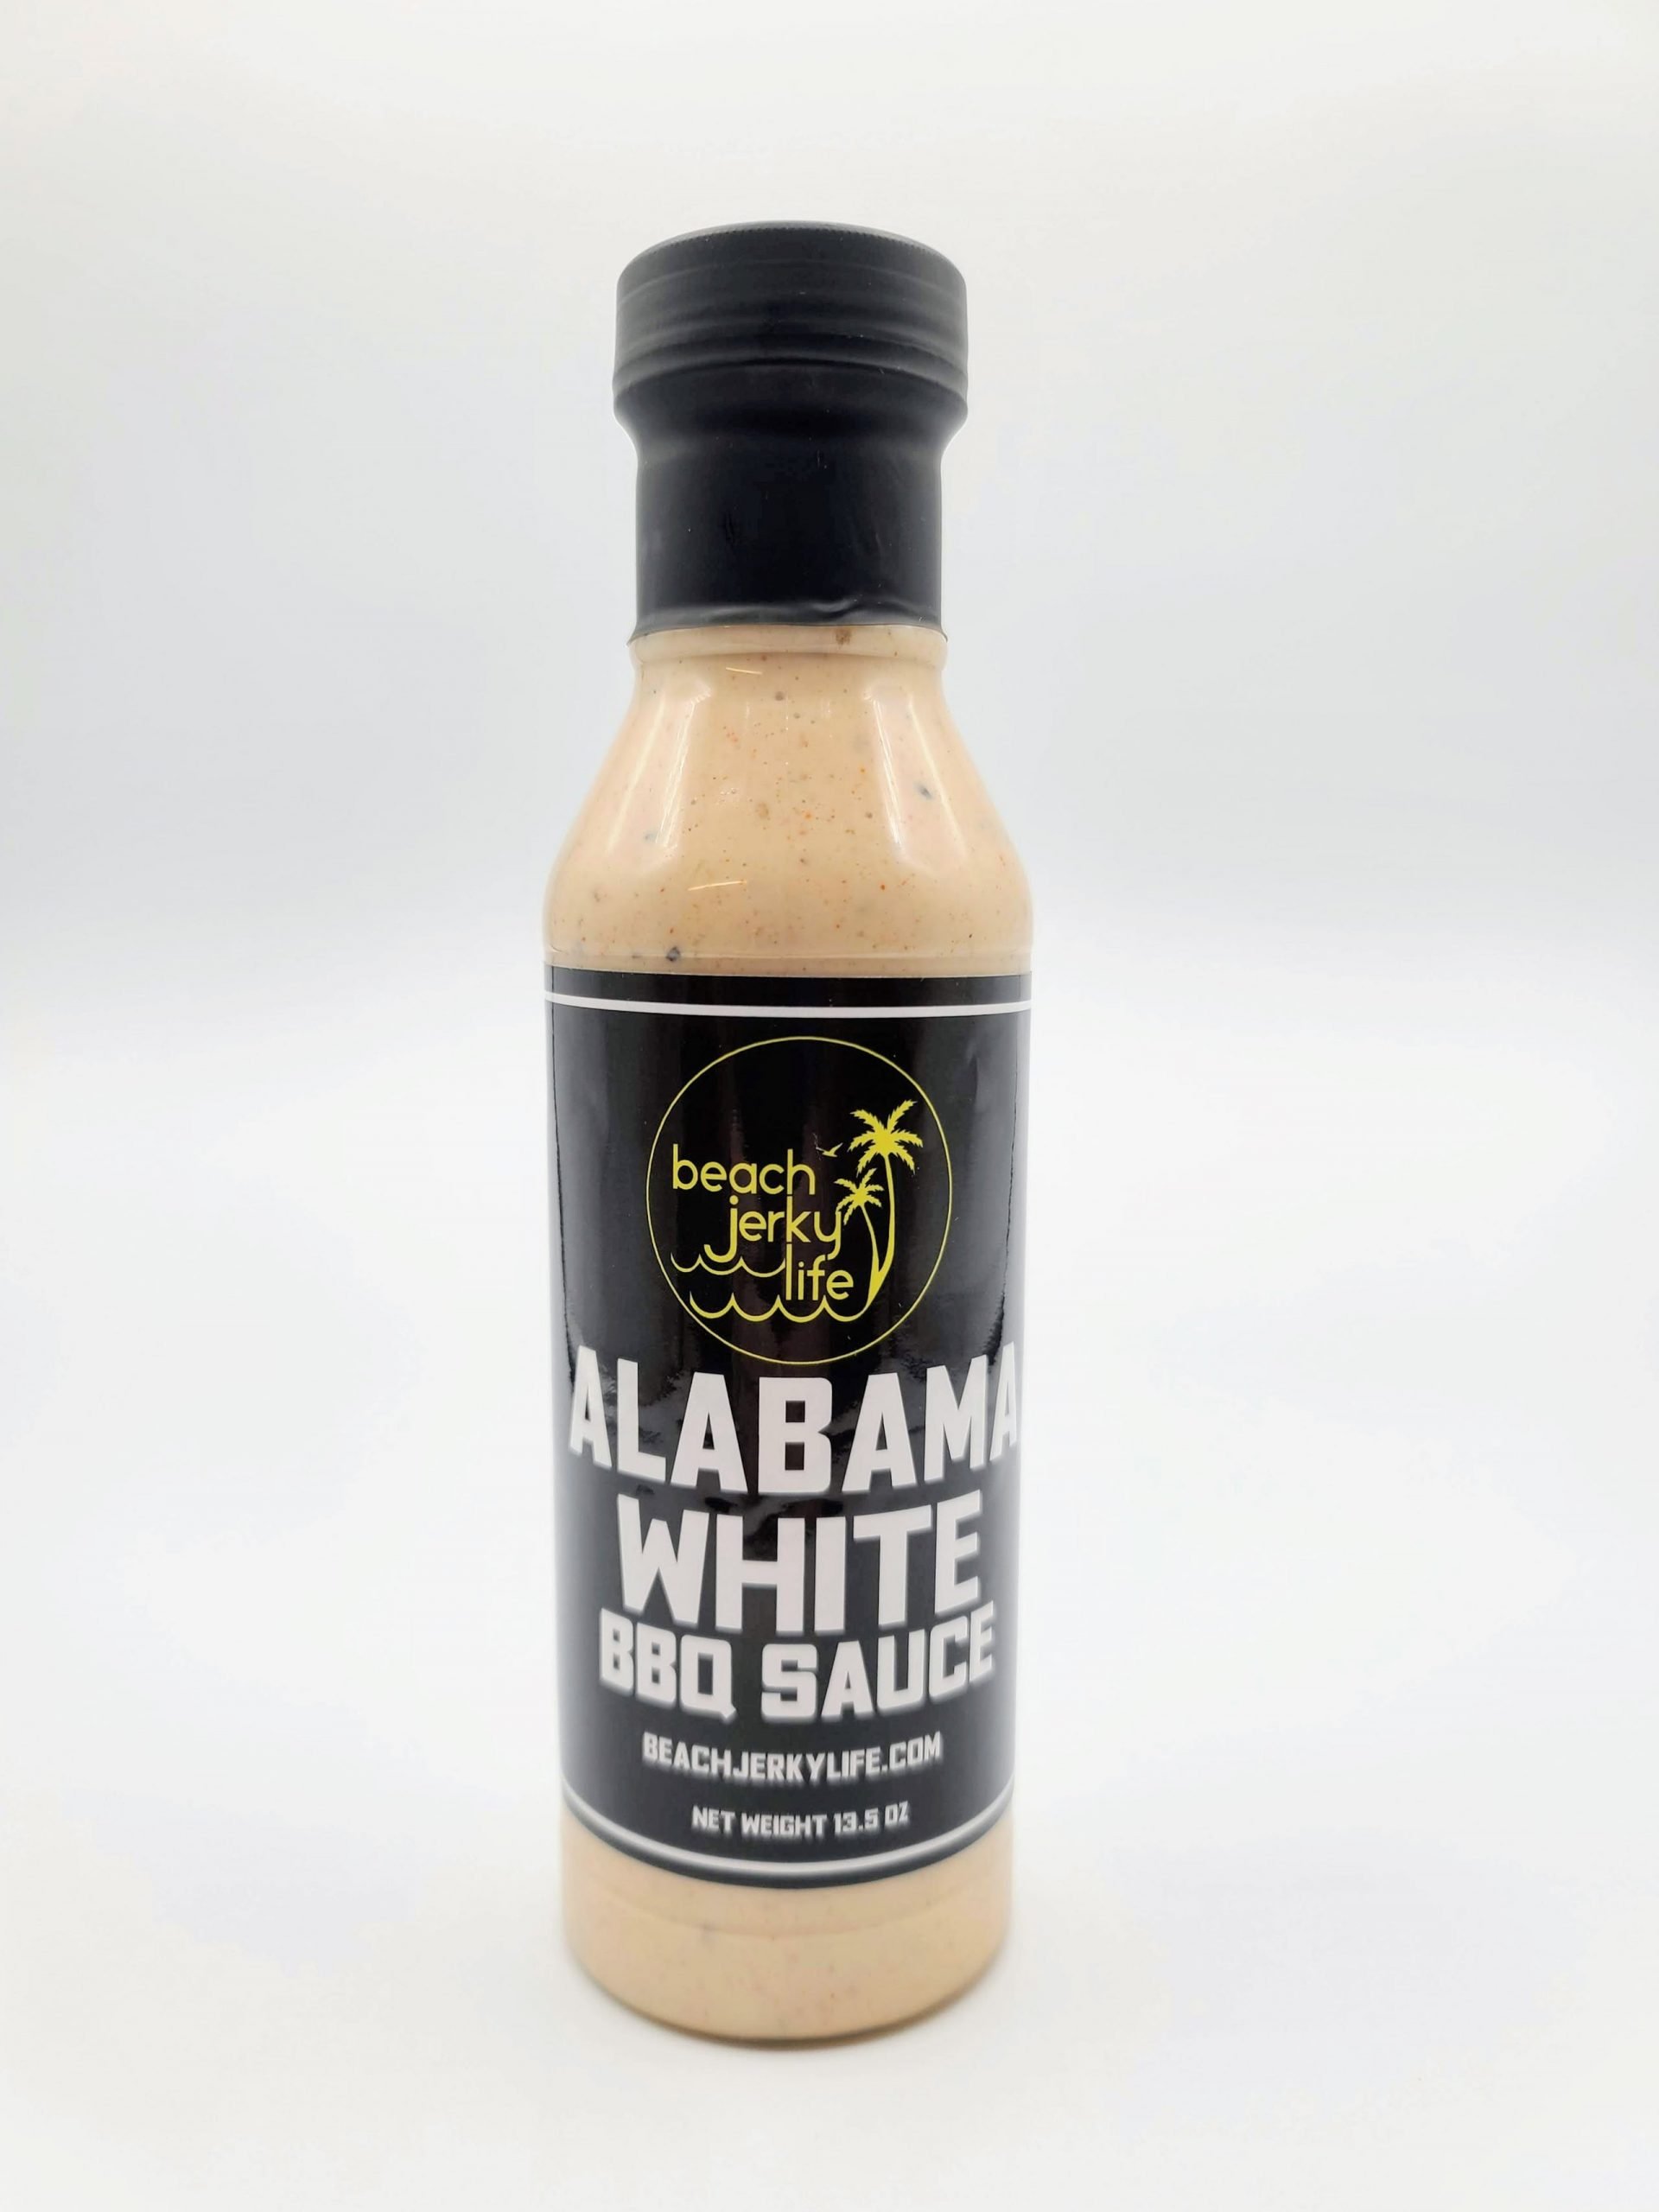 Alabama White BBQ Sauce from Beach Jerky Life